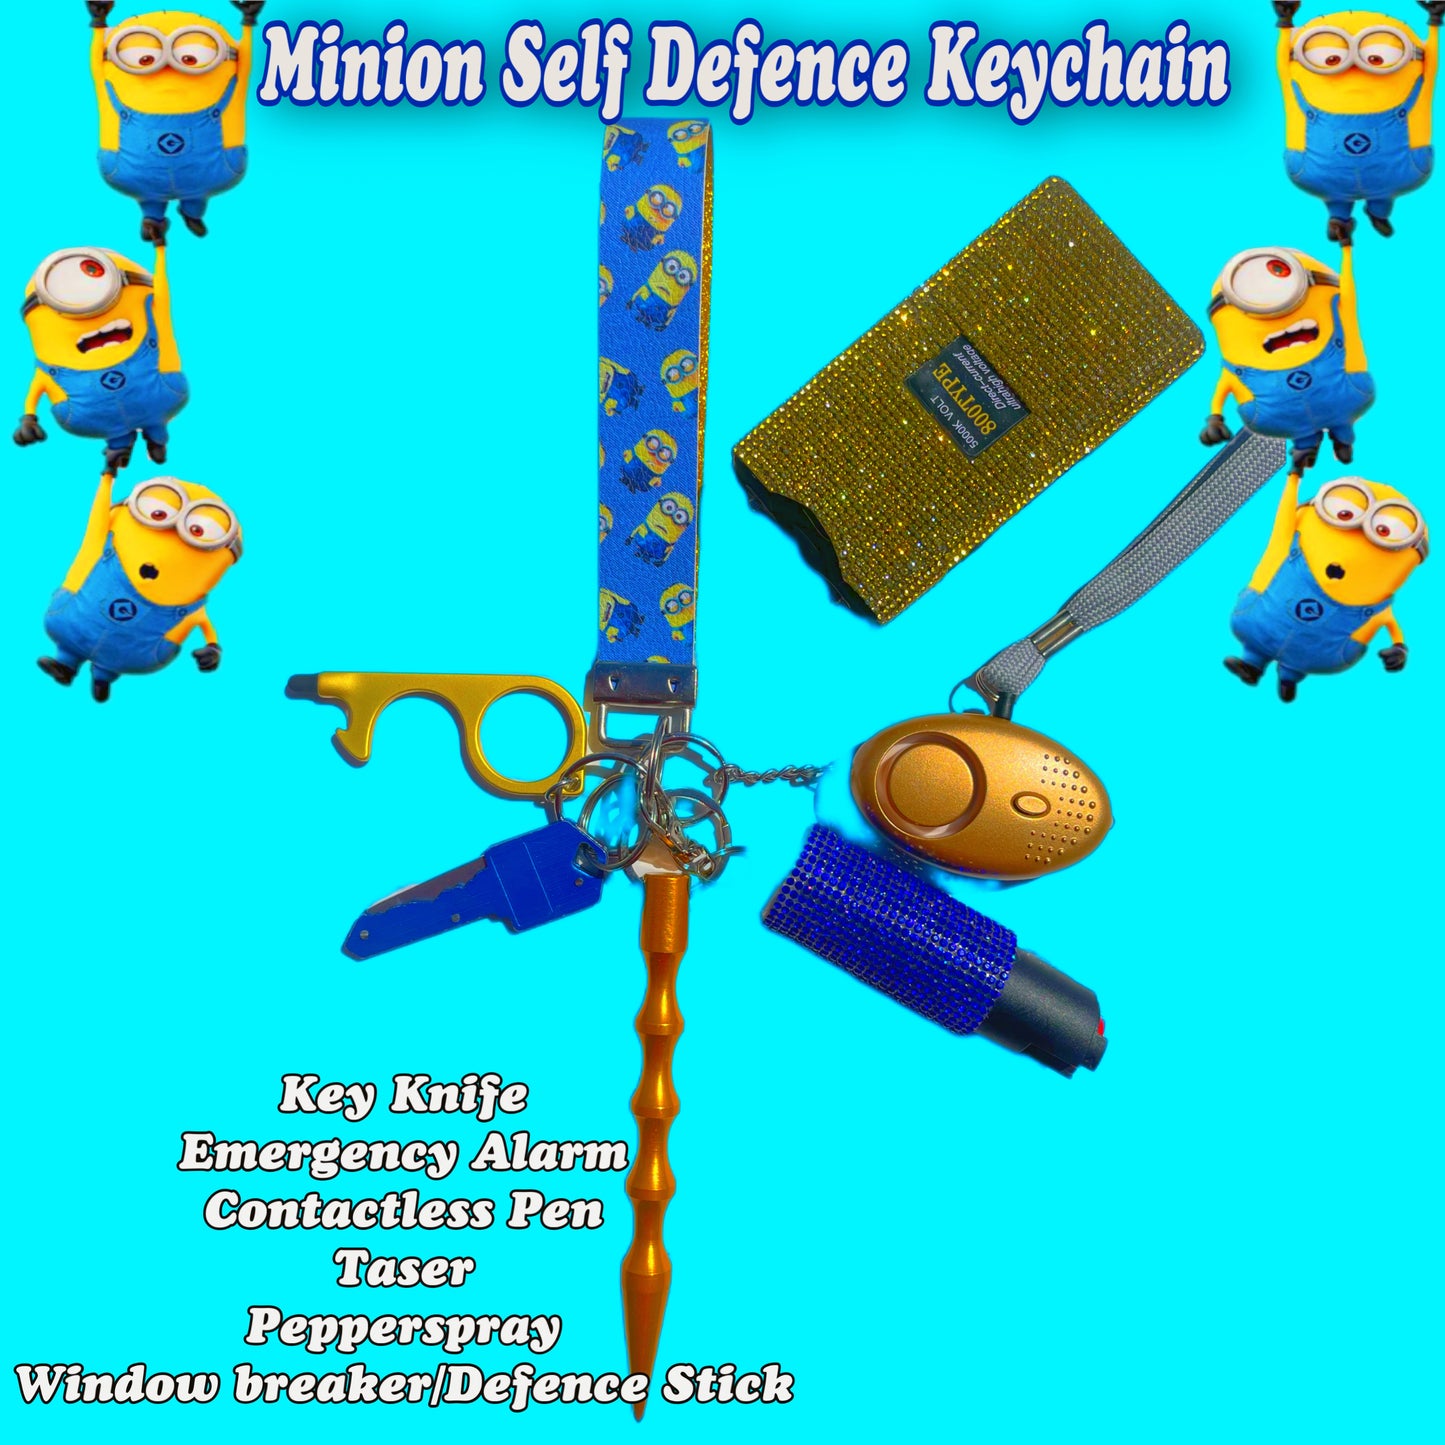 Self defense keychain